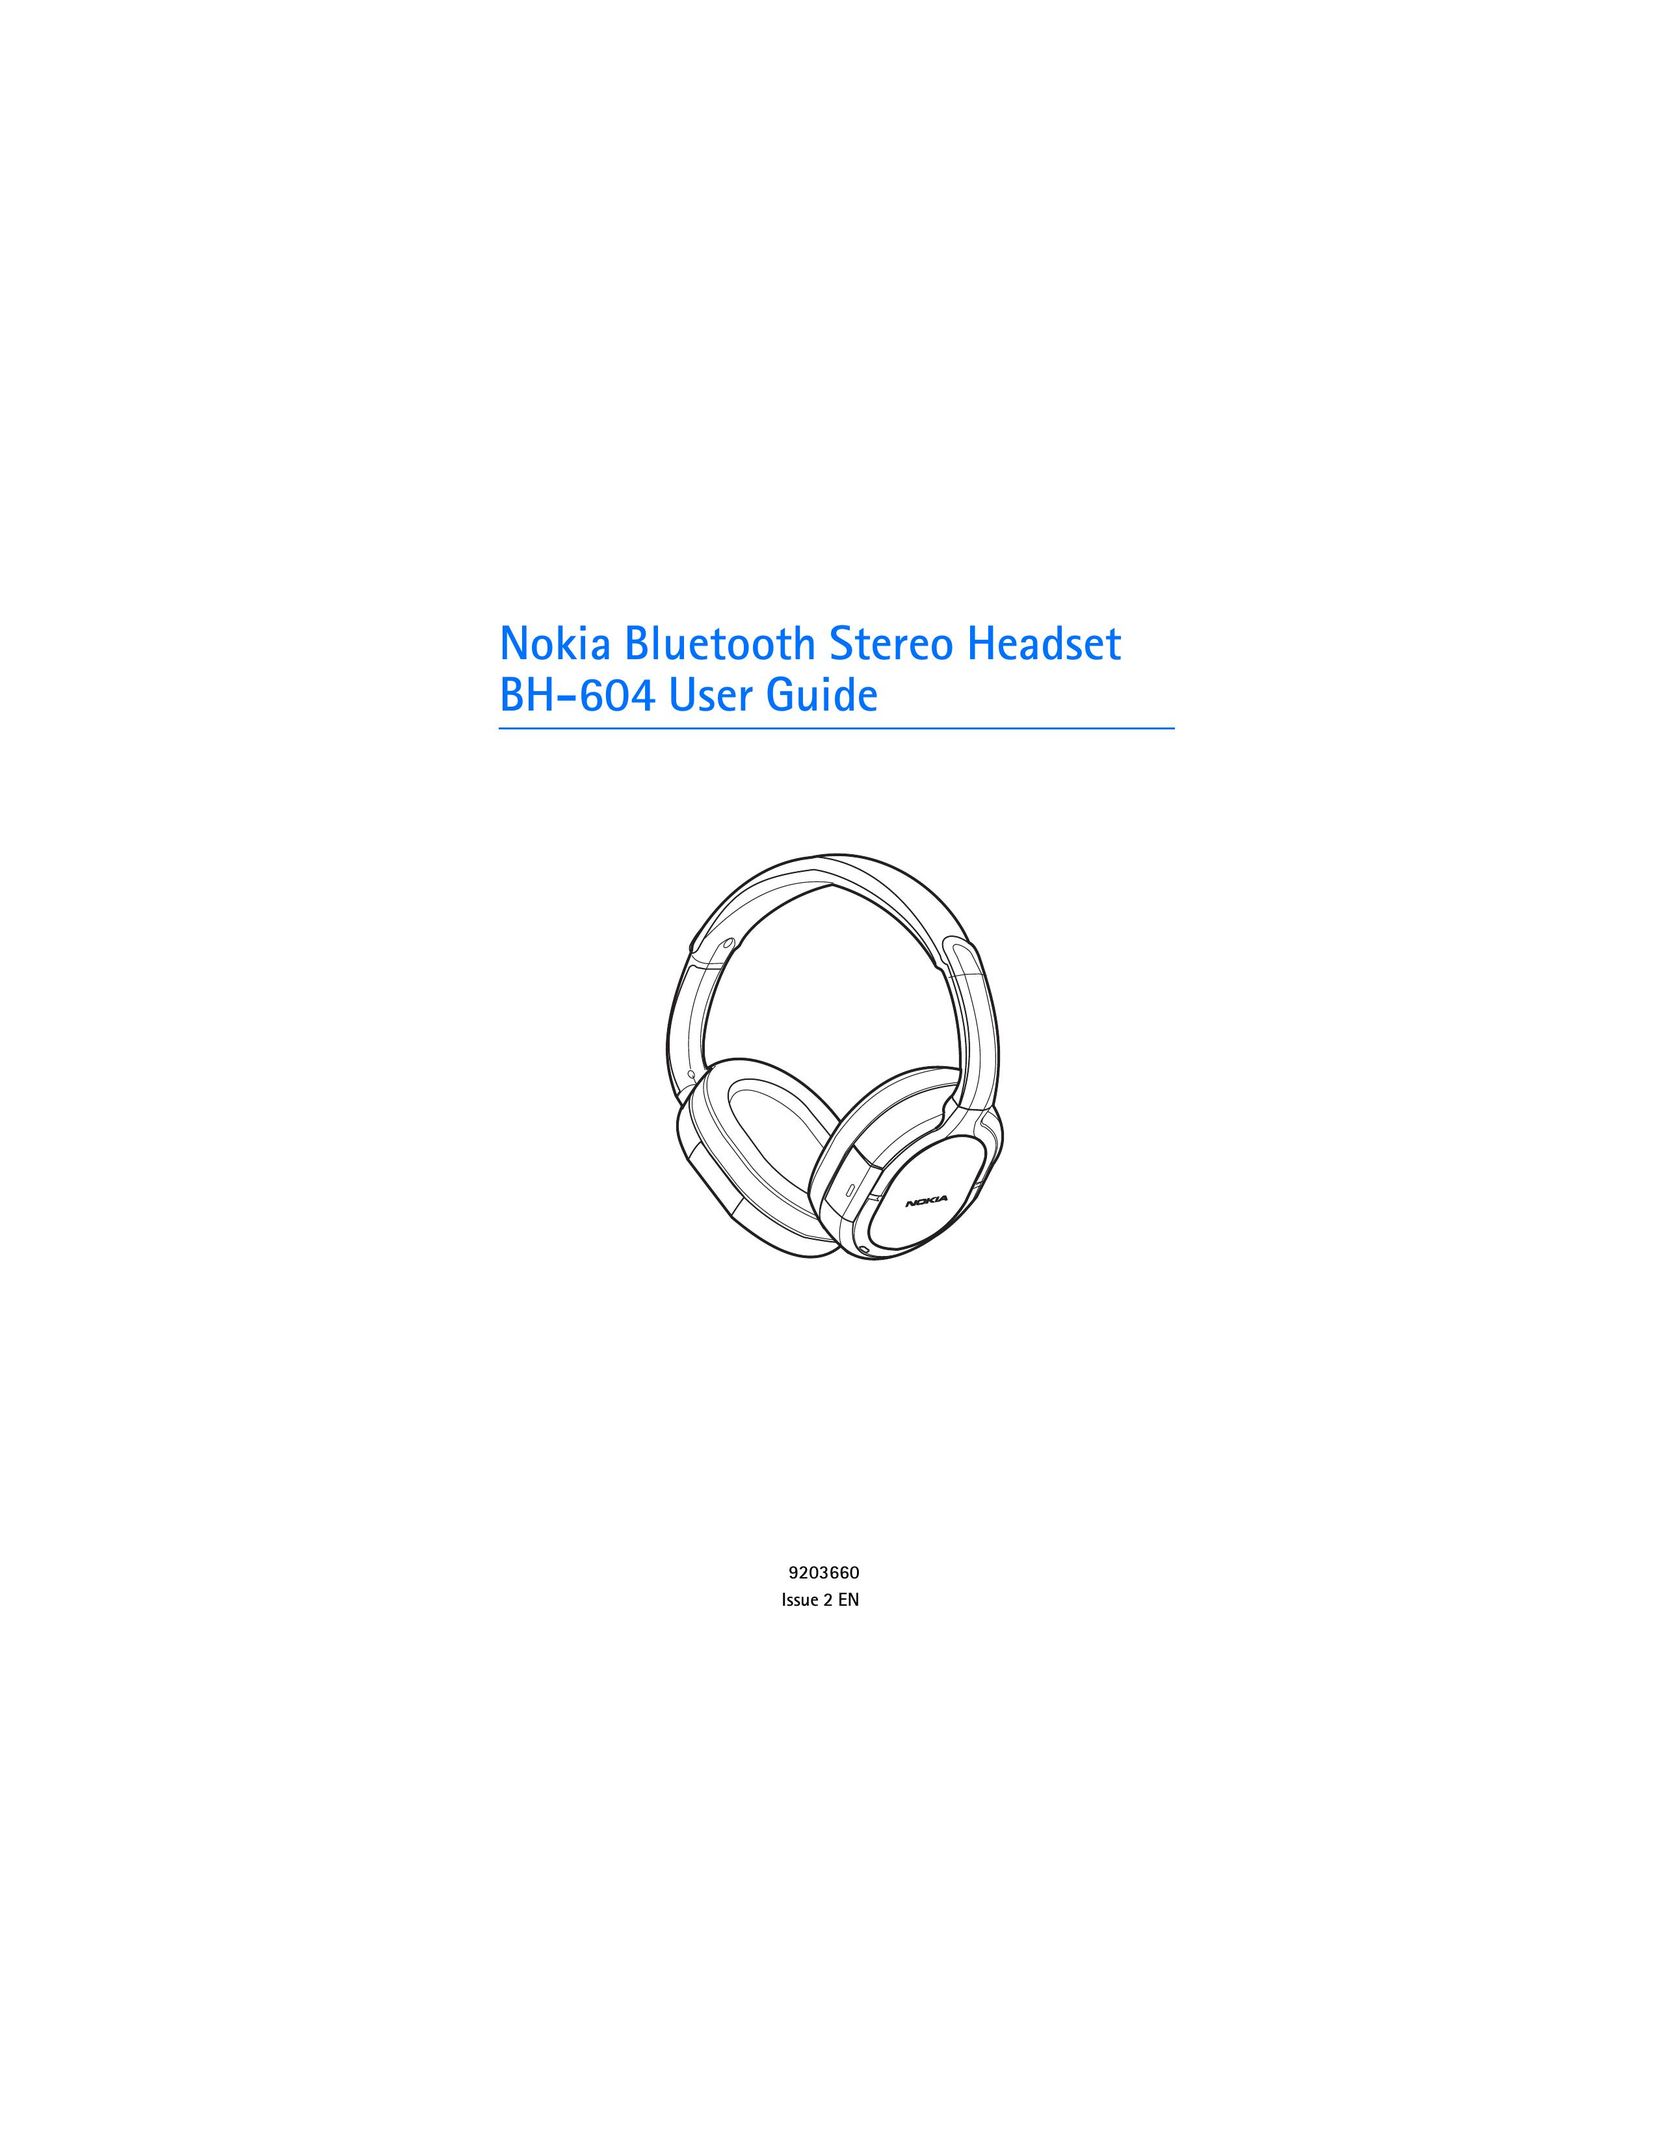 Nokia BH-604 Headphones User Manual